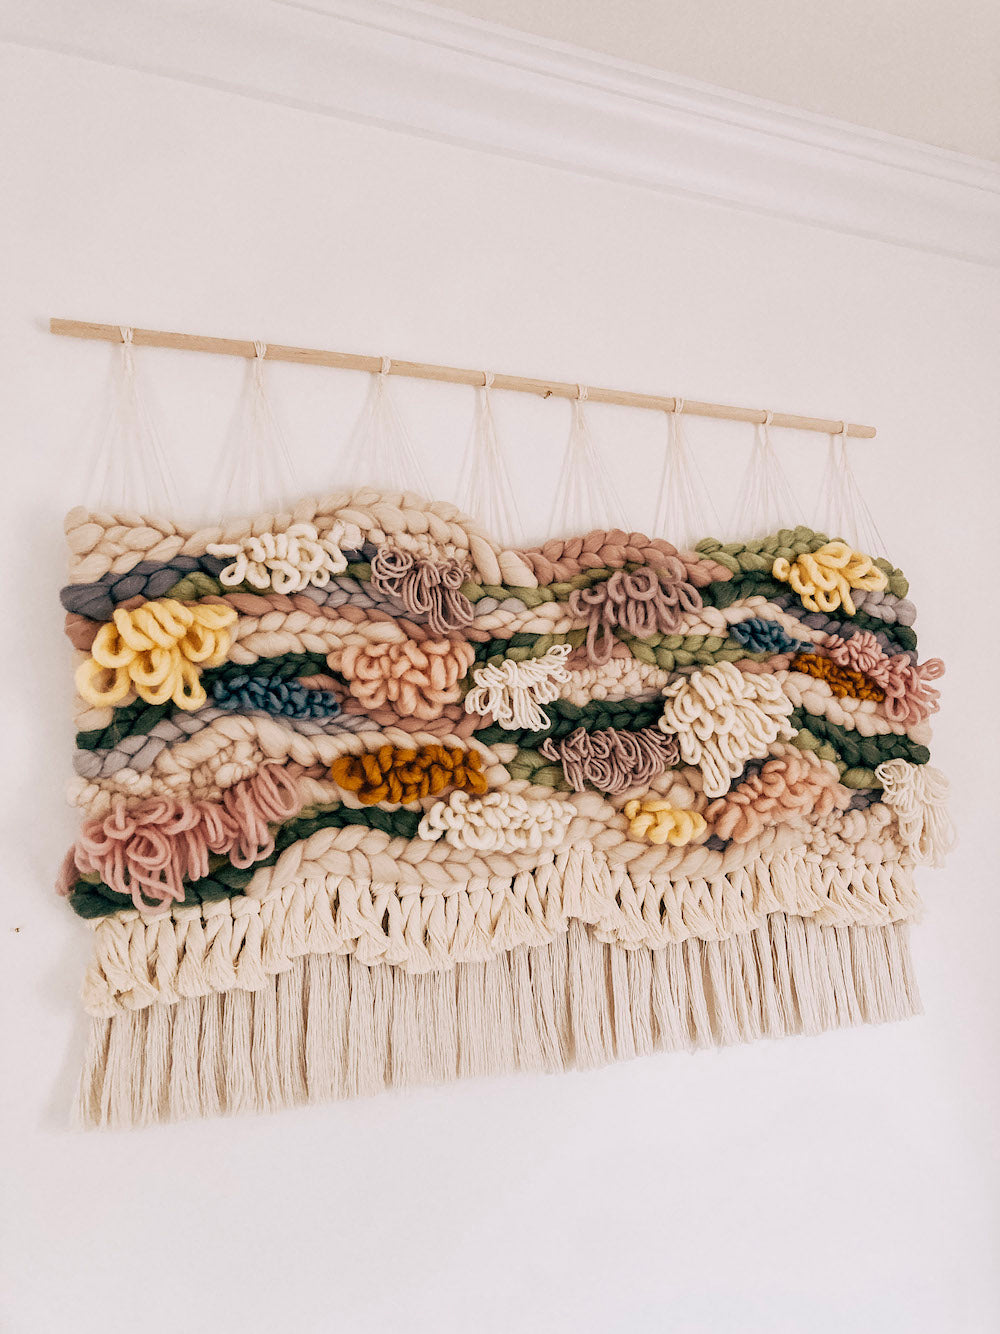 Knitting Needles - Mary Maker Studio - Macrame & Weaving Supplies